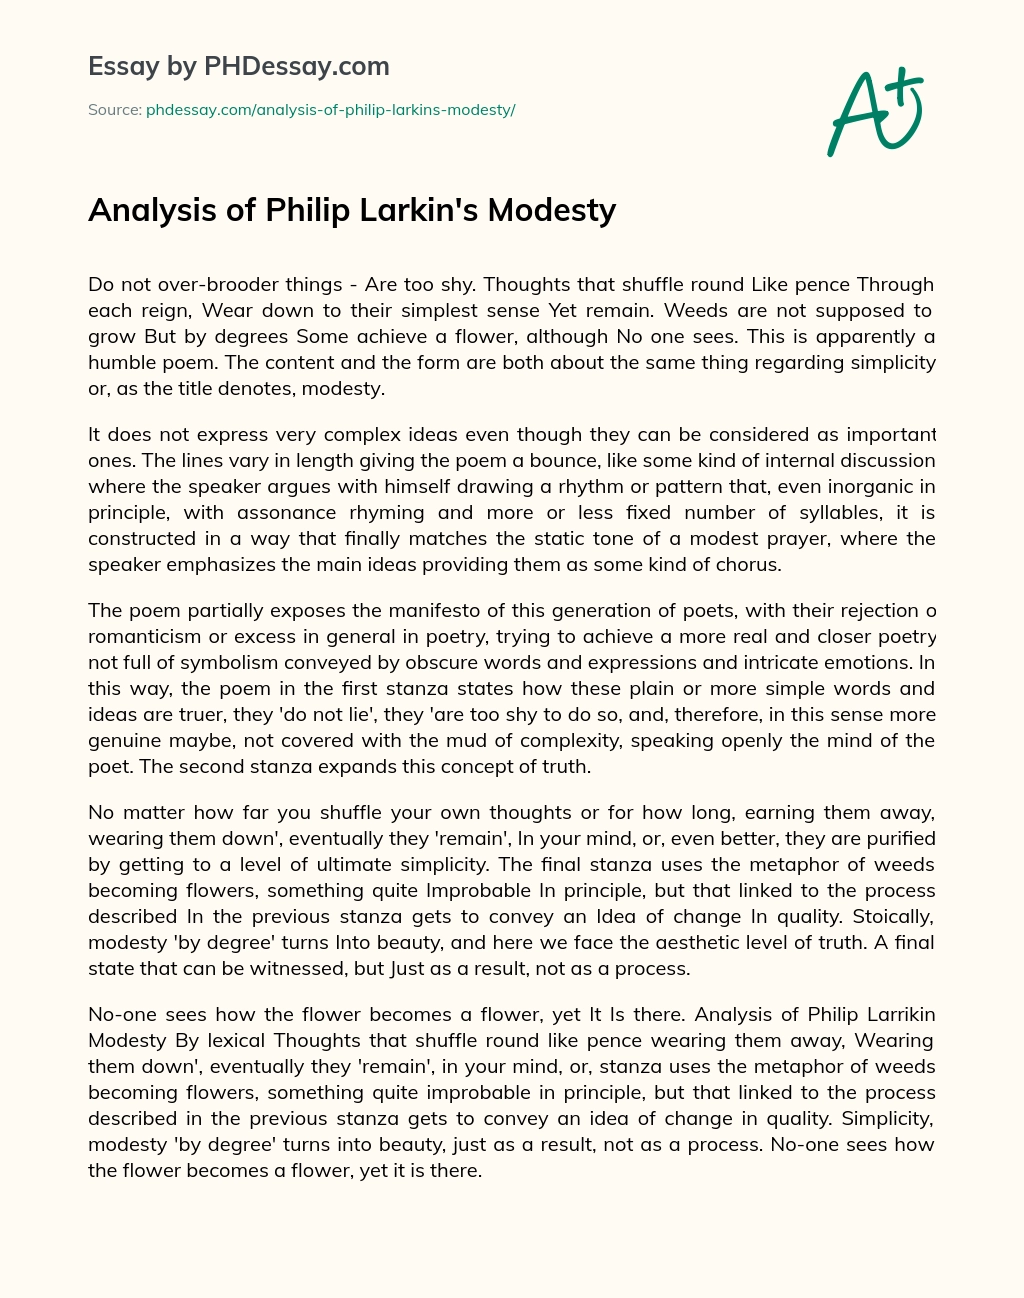 Analysis of Philip Larkin’s Modesty essay